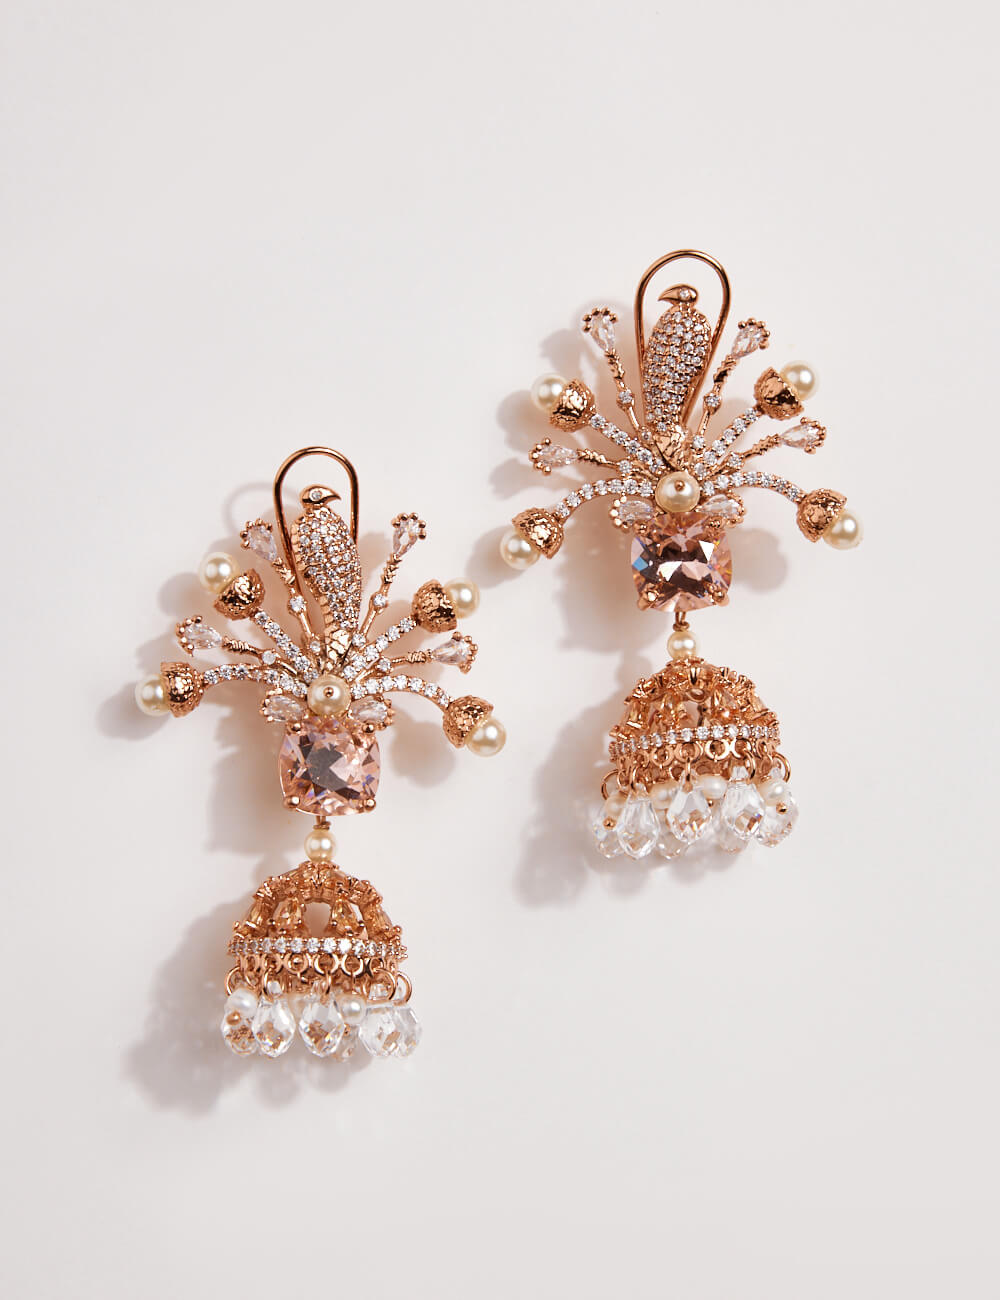 Clay flower bridal earrings - Petite Creamy floral bridal earrings - Style  #2102 | Twigs & Honey ®, LLC